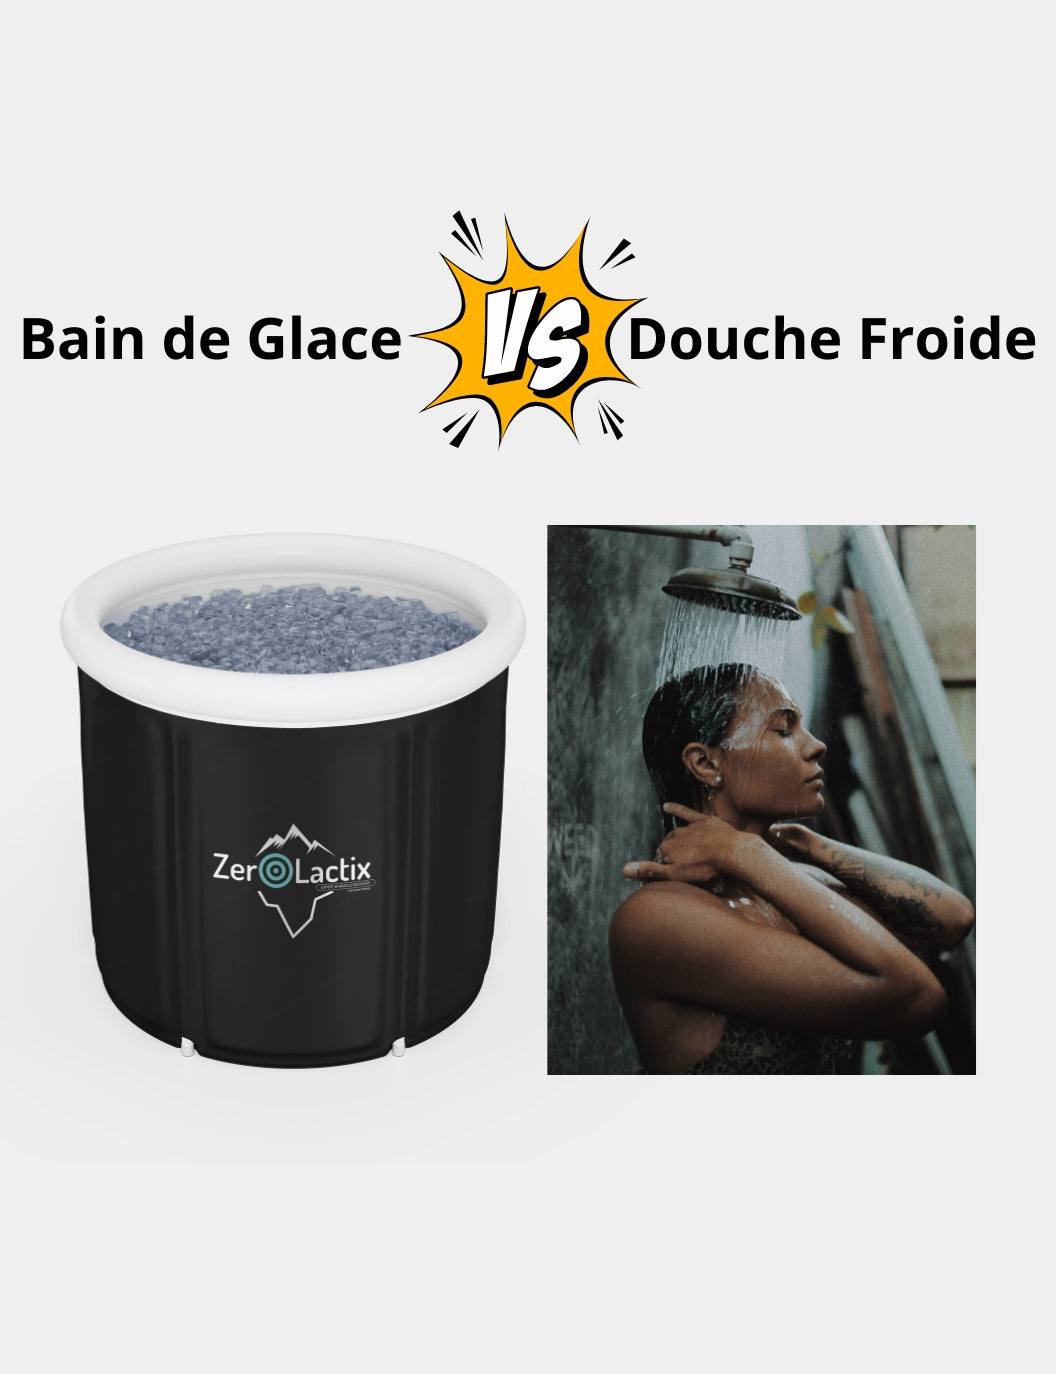 Bain de Glace vs. Douche Froide